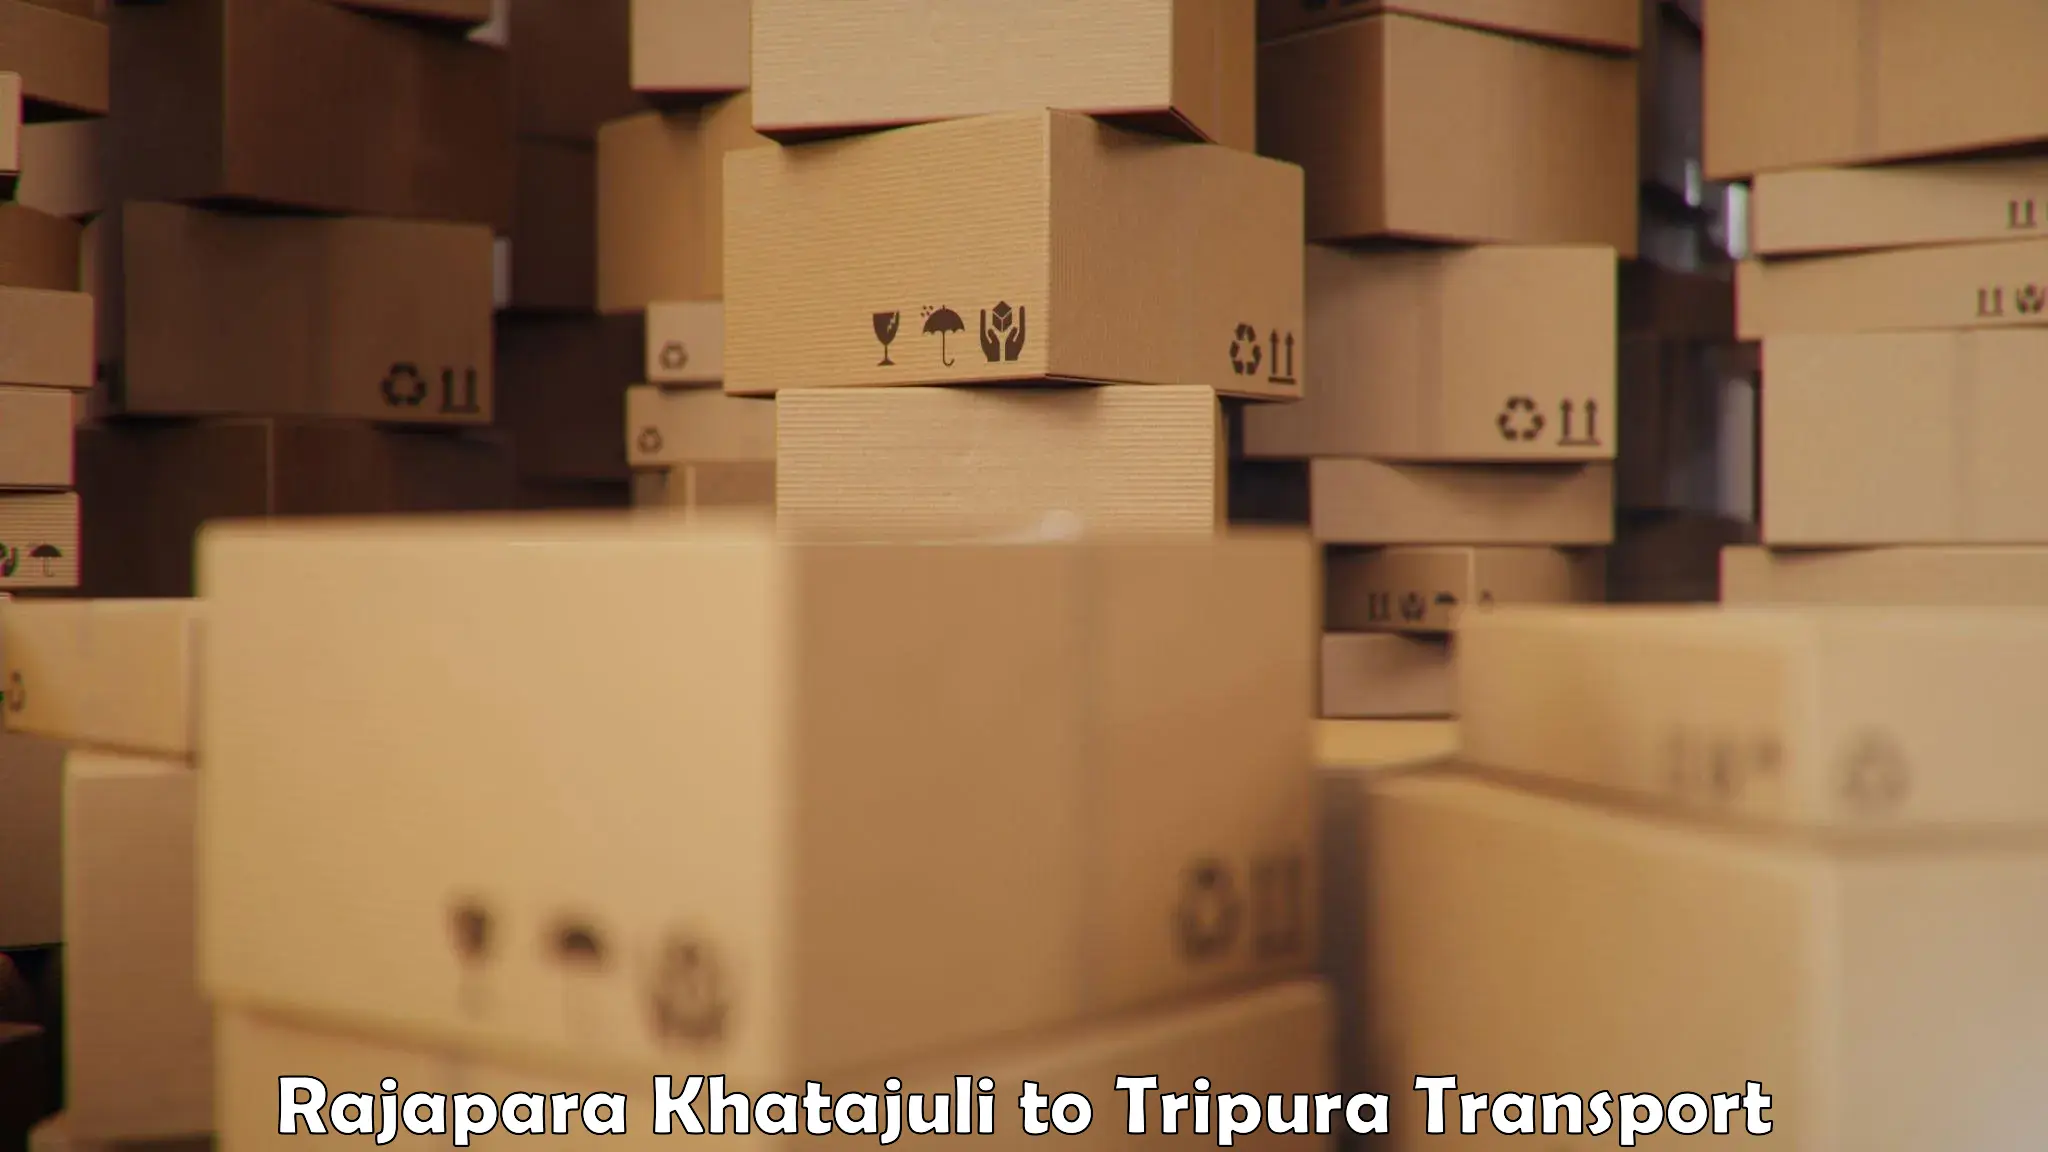 Daily parcel service transport Rajapara Khatajuli to Udaipur Tripura